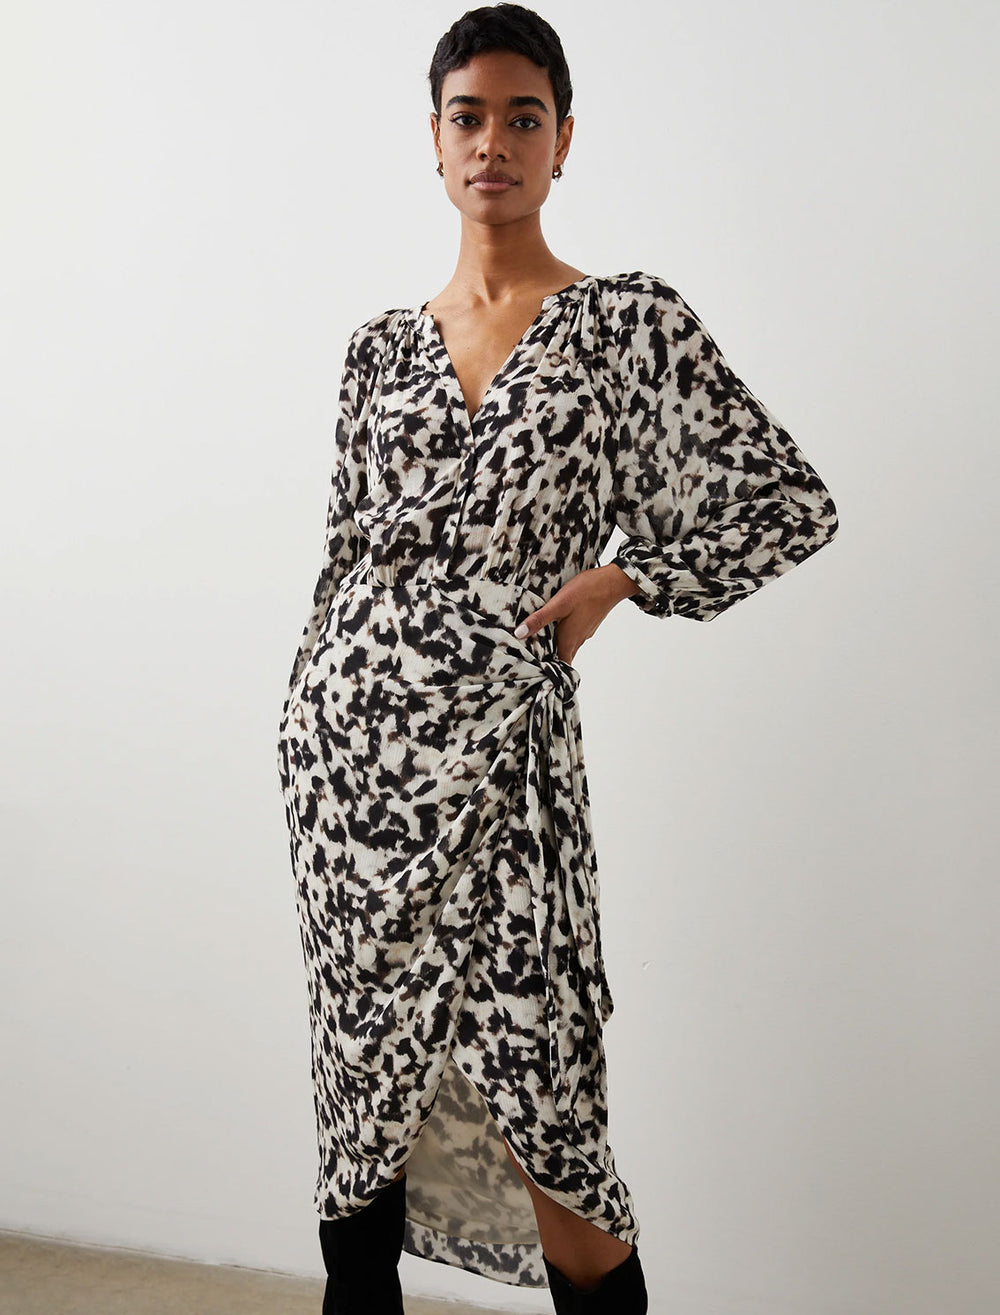 Model wearing Rails' tyra dress in blurred cheetah.